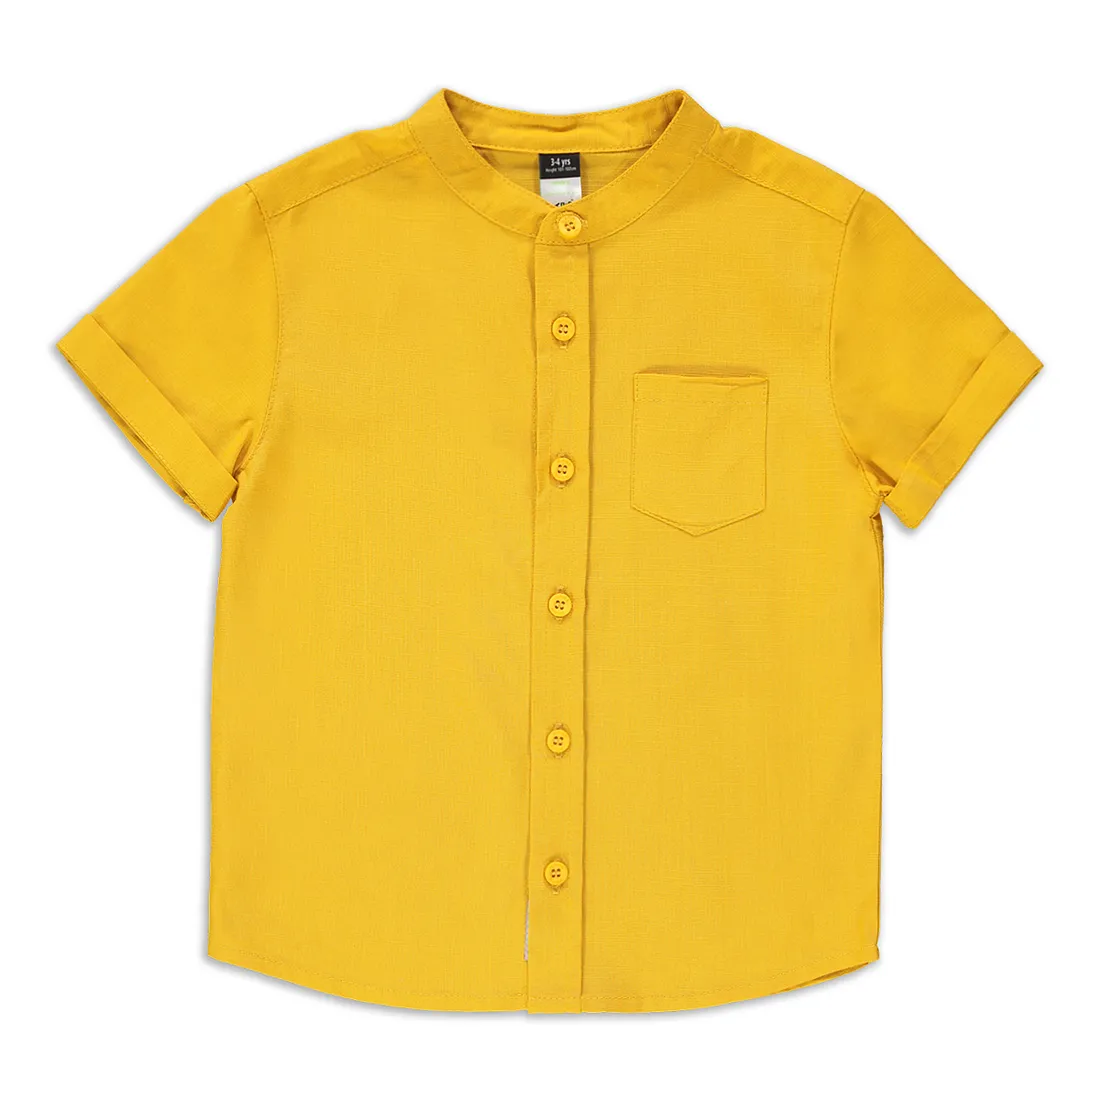 Mandarin short sleeve shirt yellow - BOYS 2-8 YEARS Tops & T-Shirts ...